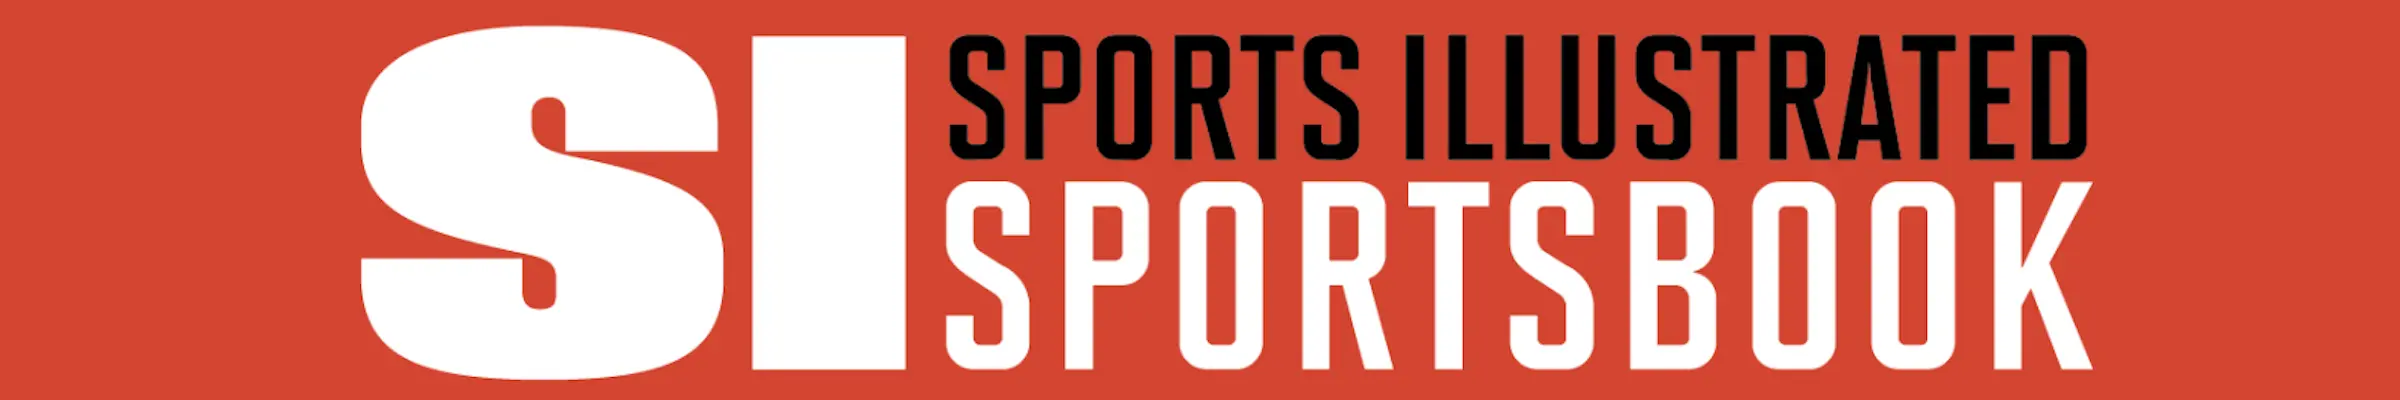 SI Sportsbook 1200x200 Logo